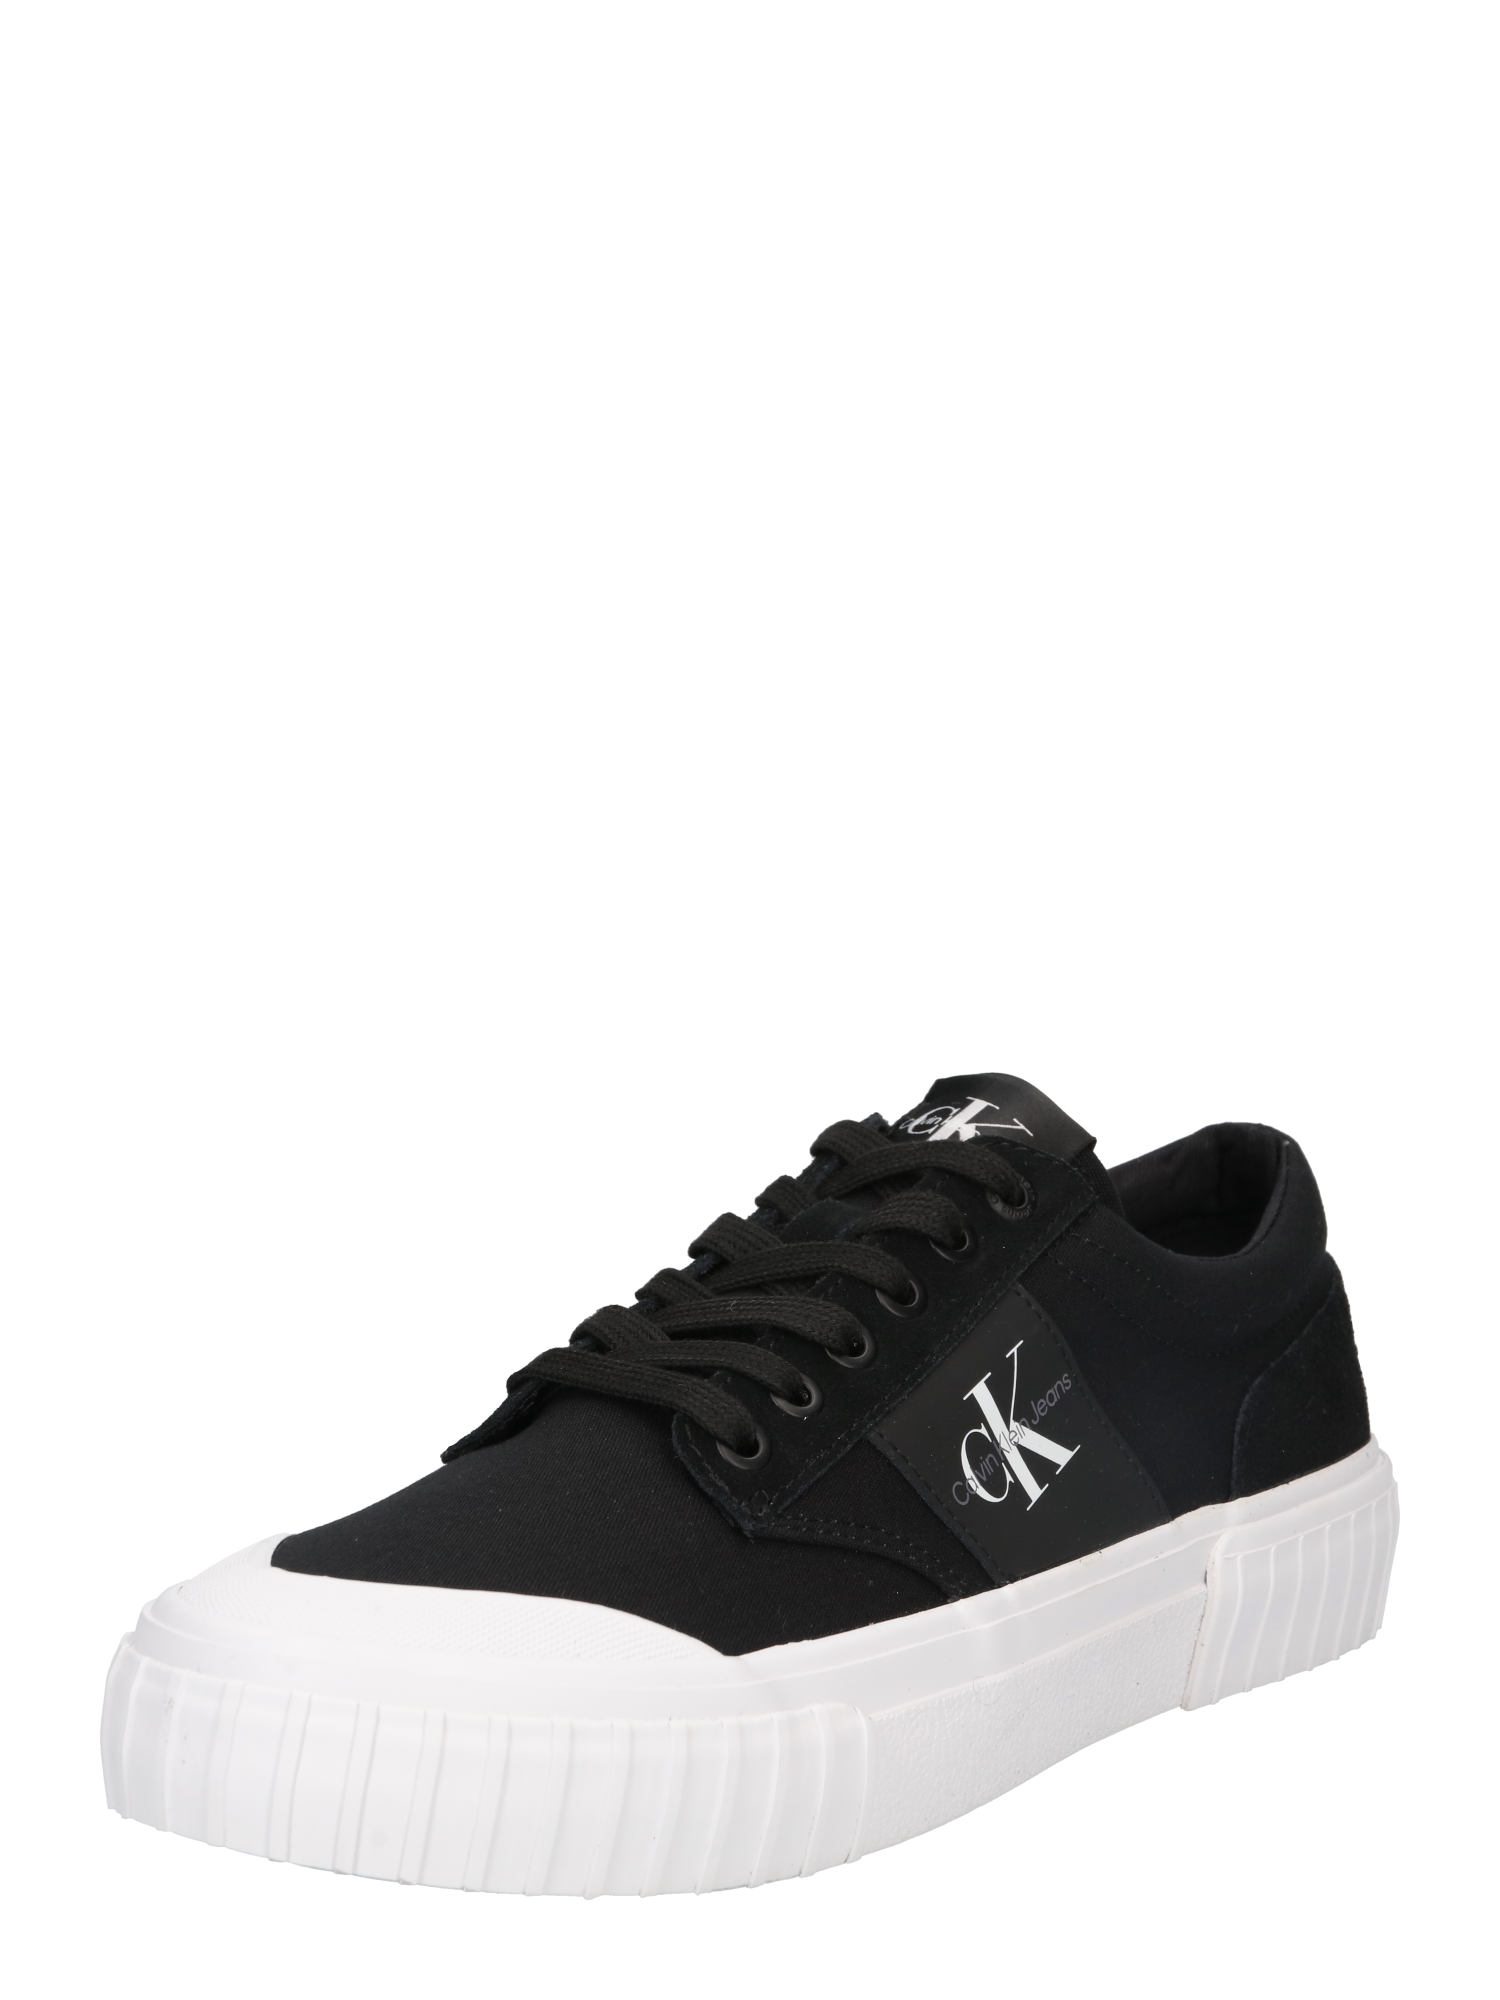 Zshh6 Trampki & sneakersy Calvin Klein Jeans Trampki niskie NEW SKATER 2 w kolorze Czarnym 